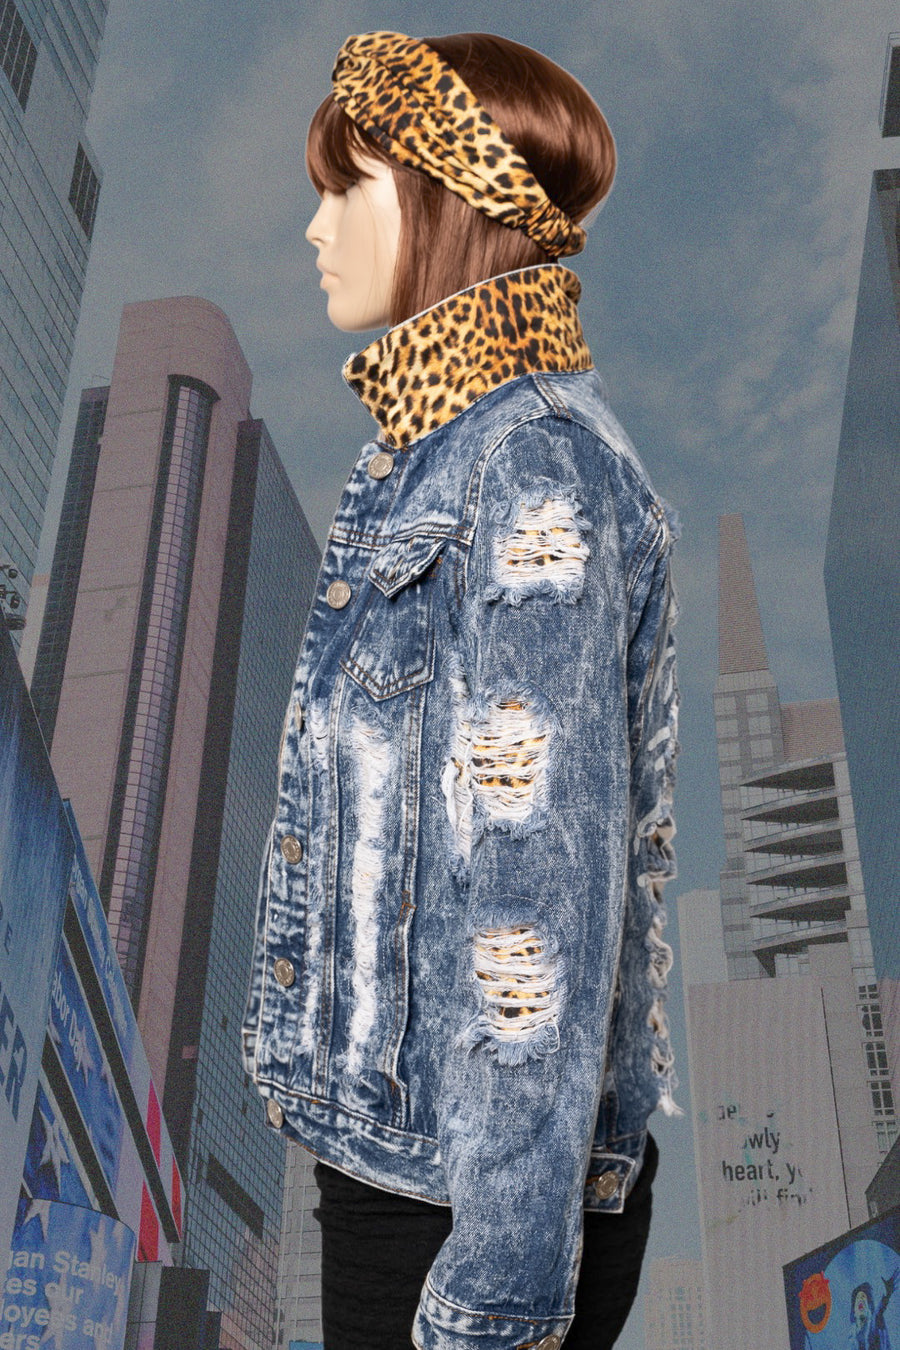 Leopard Print Distressed Upcycled Denim Jacket